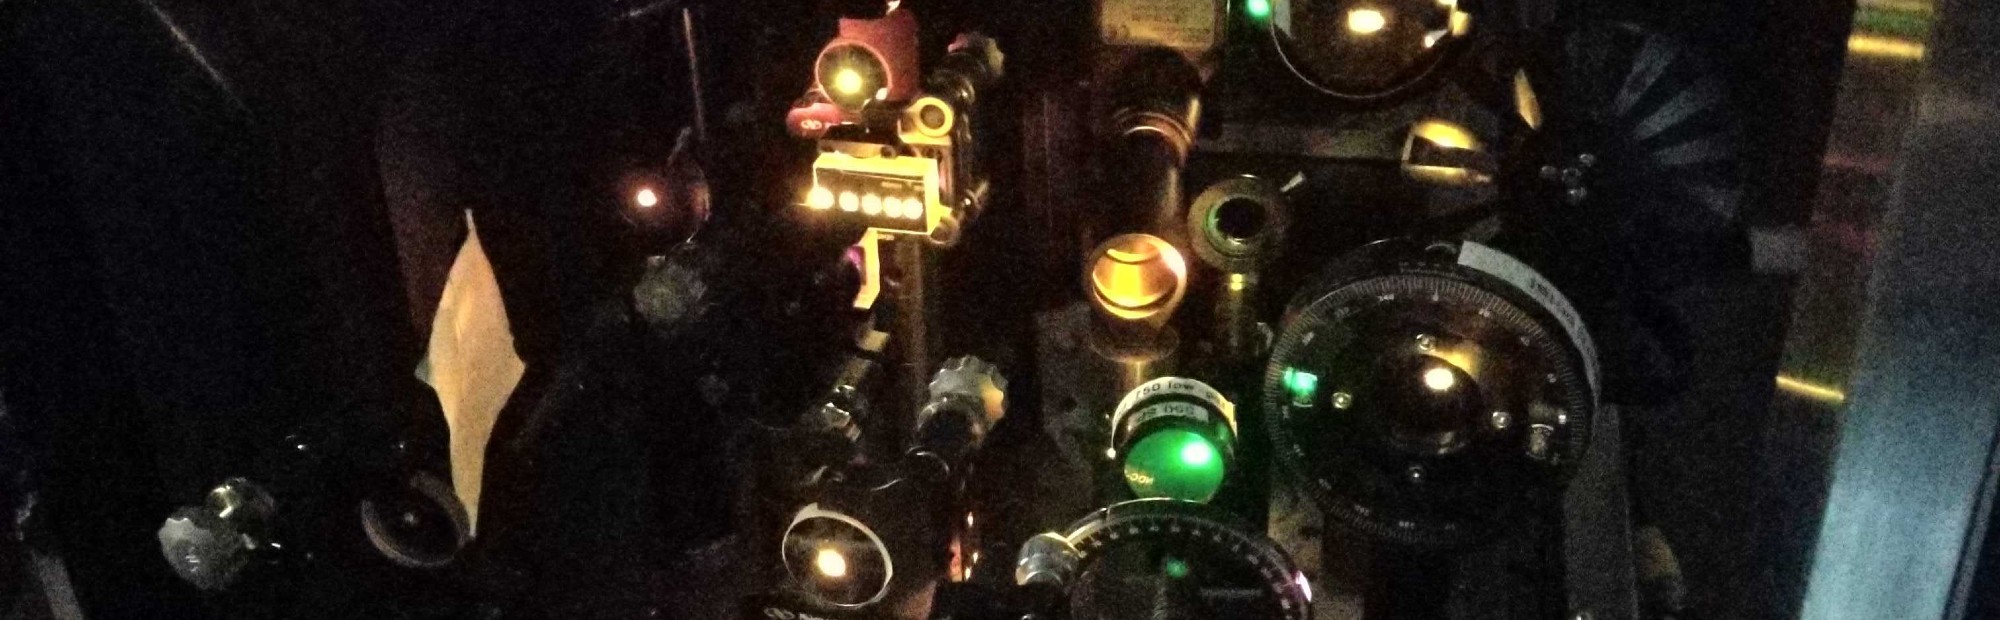 Laser spectroscopy machine in a dark room.